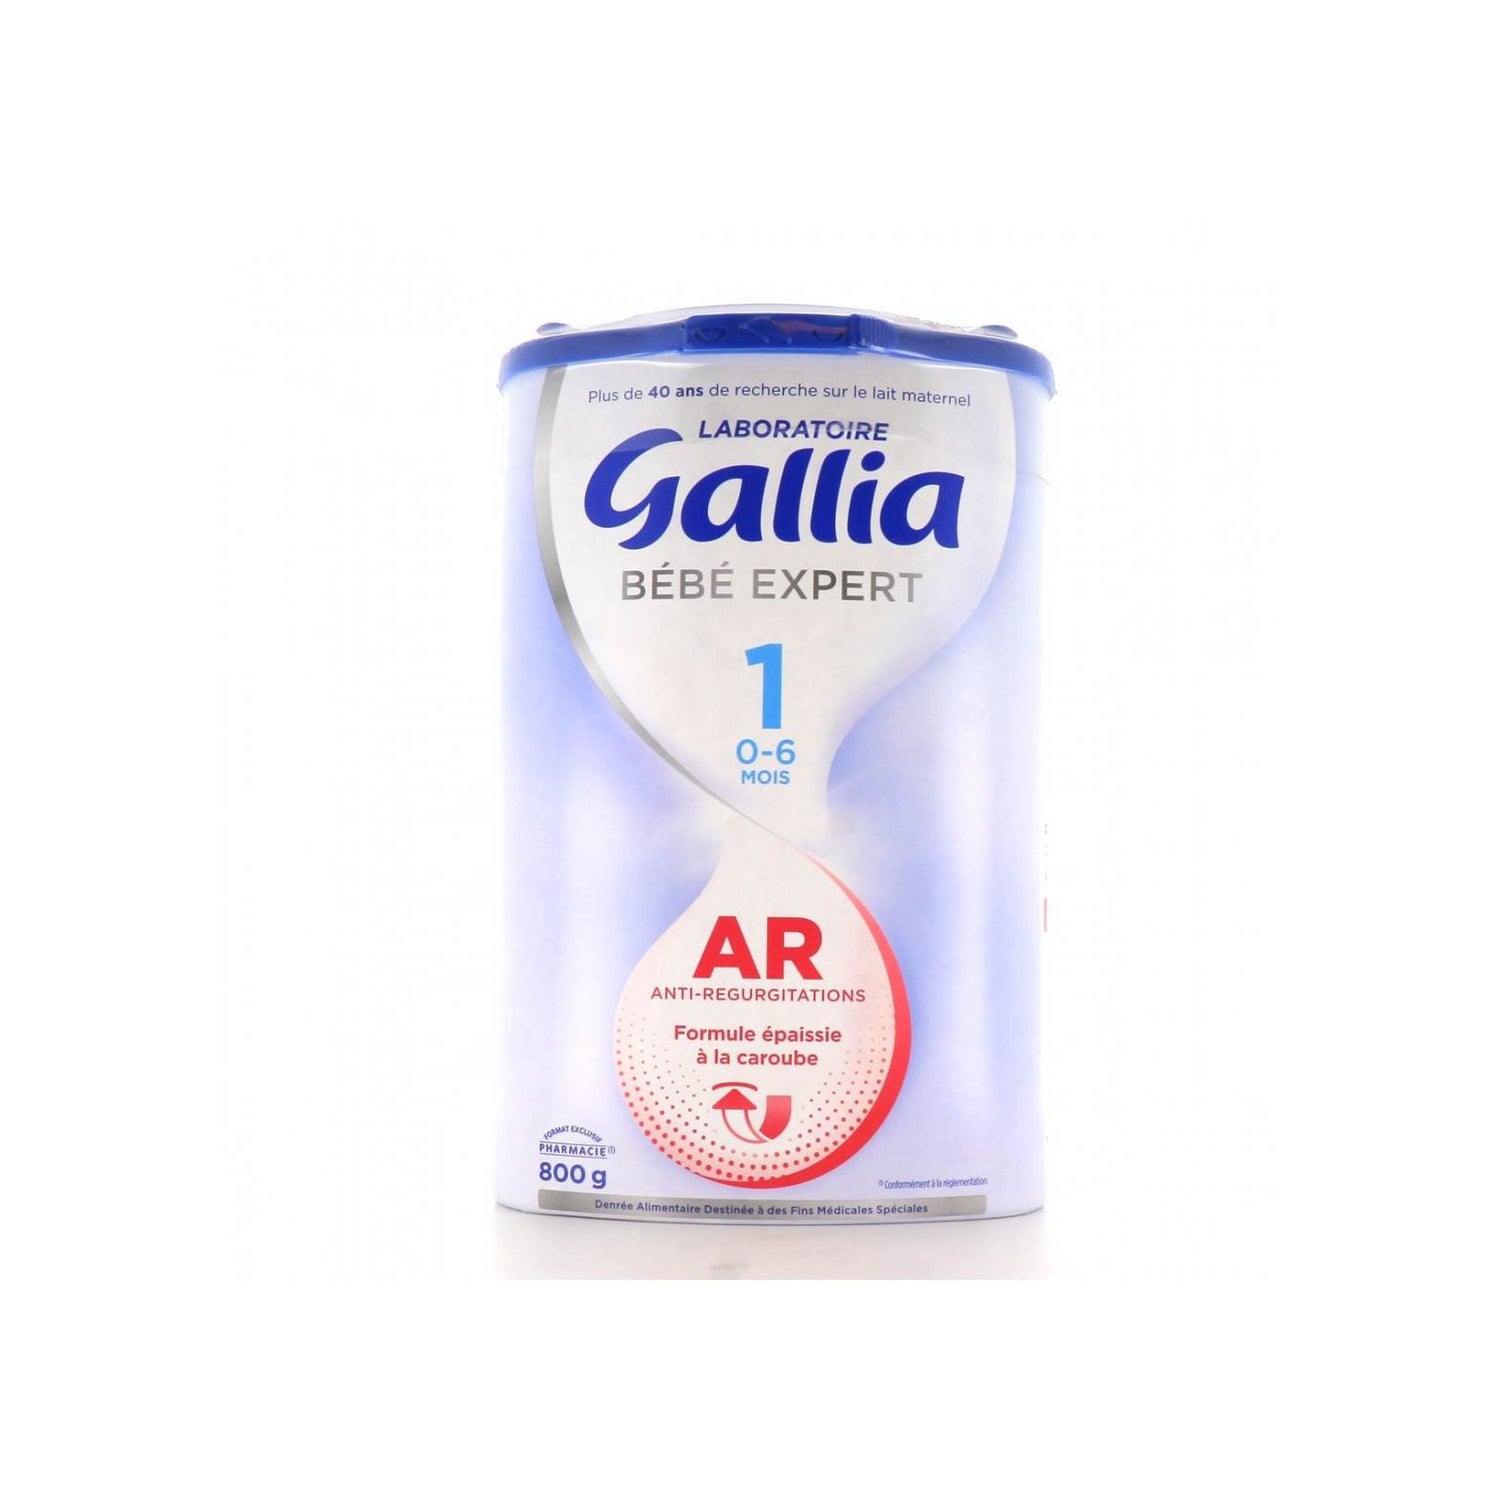 Pack de 6 Gallia Calisma 1er âge - 830g - Lait infantile